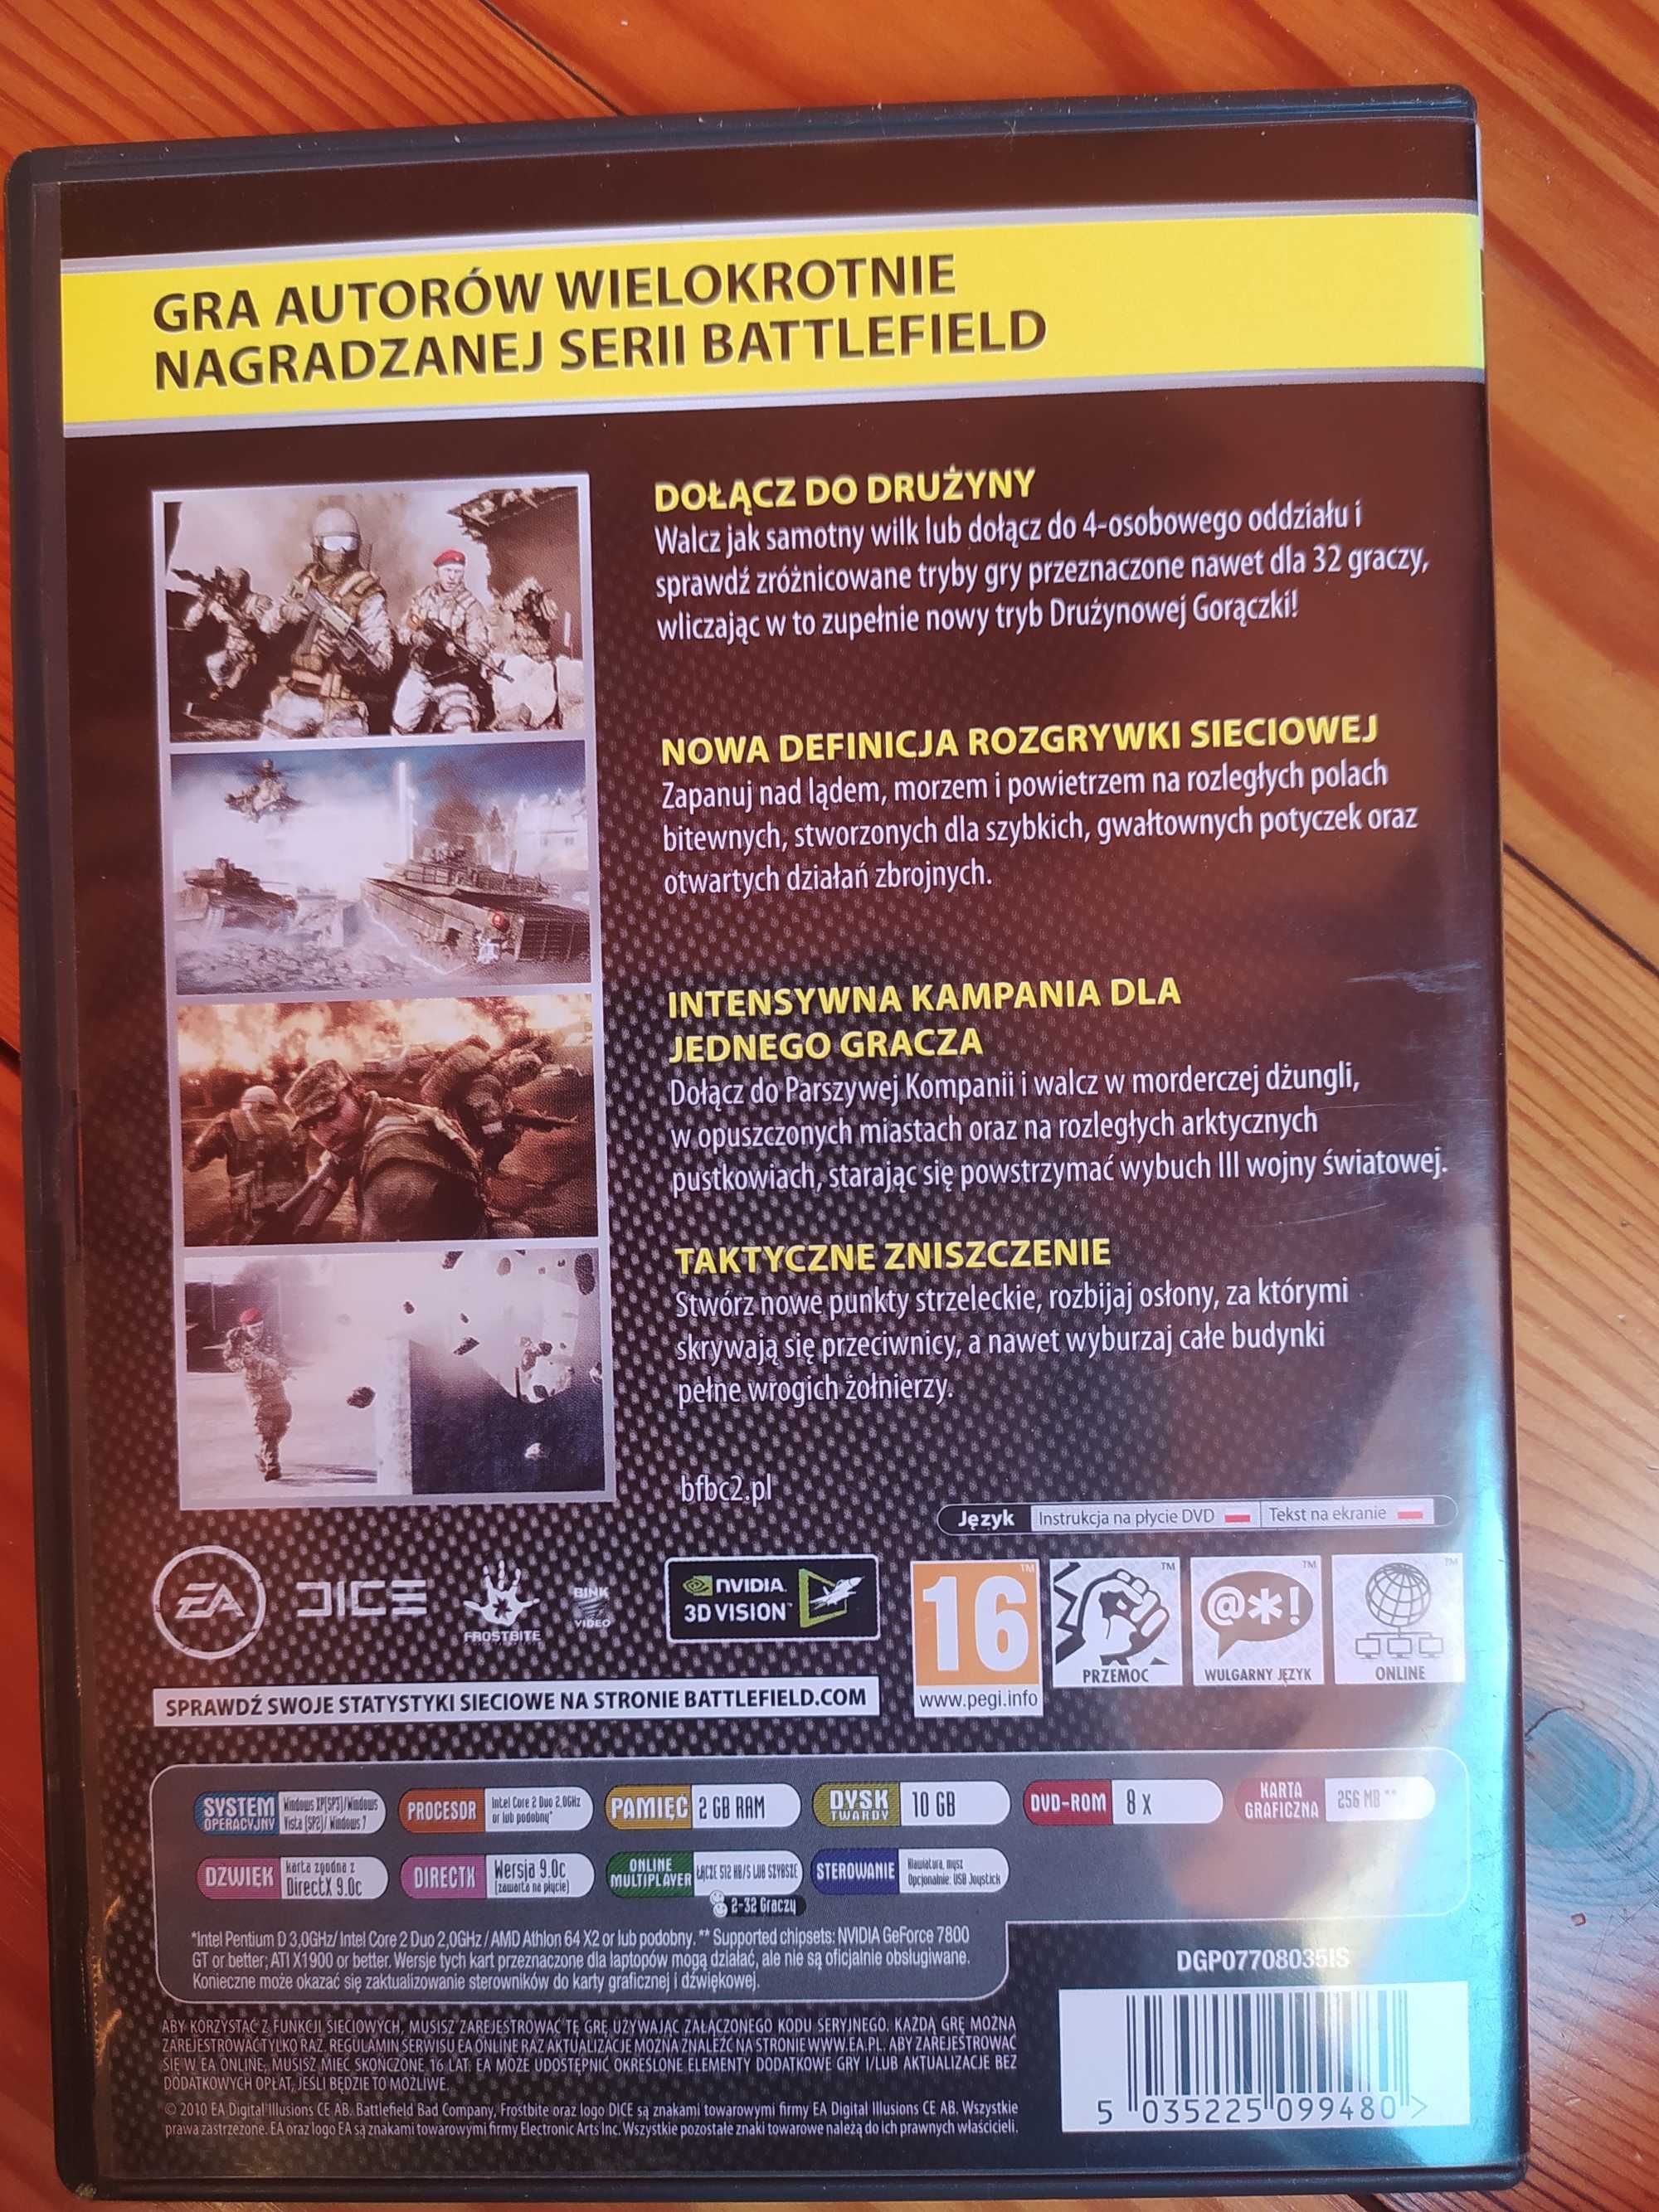 Battlefield Bad Company 2 PC